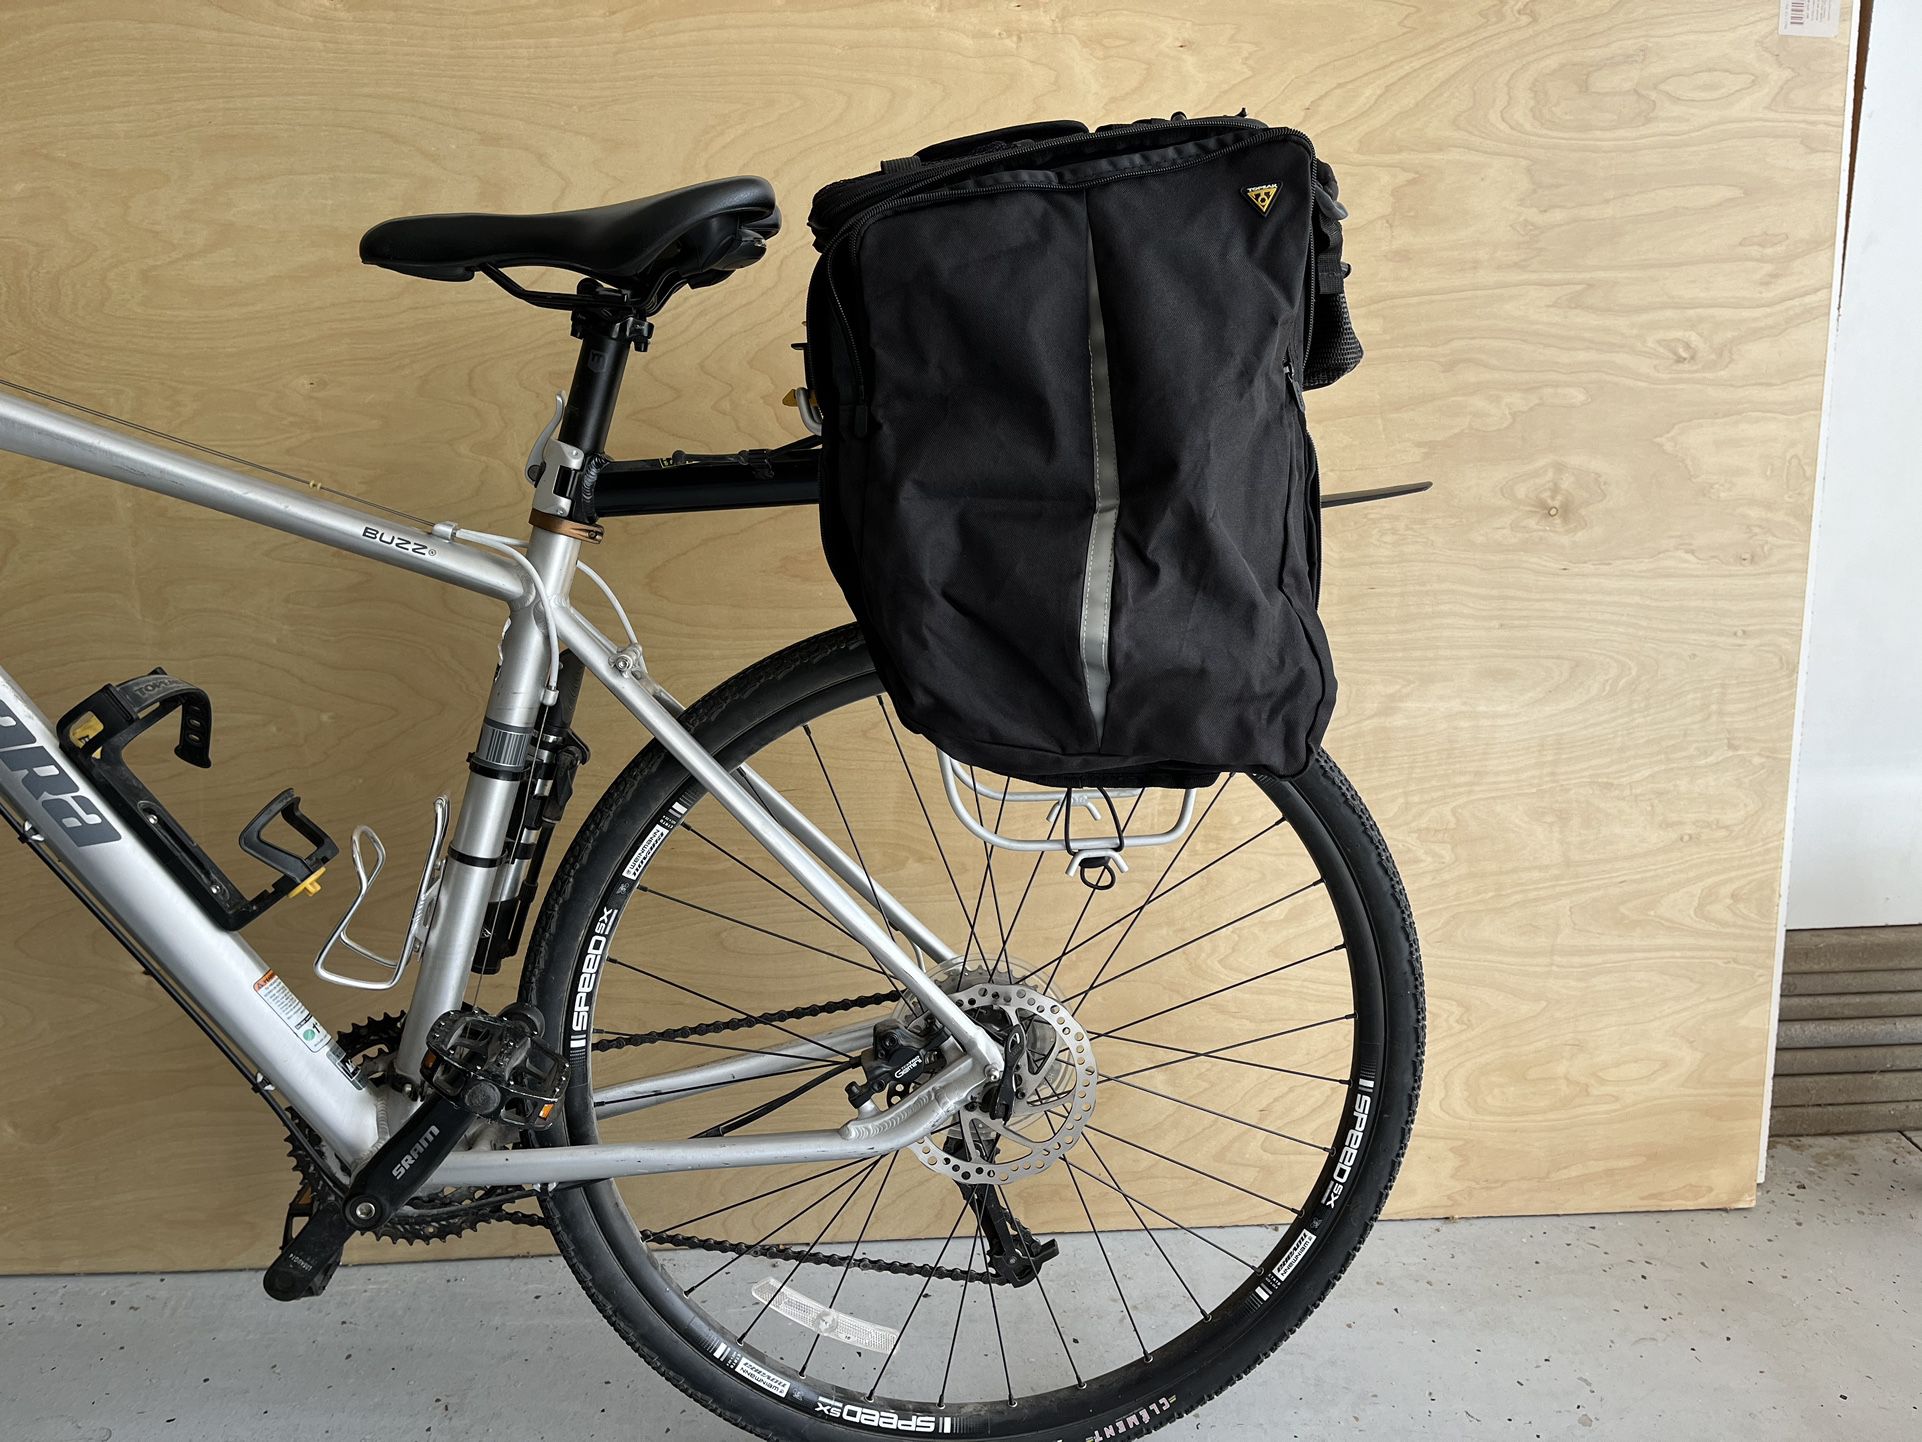 Bicycle Panier rack with Companion Trunk Bag